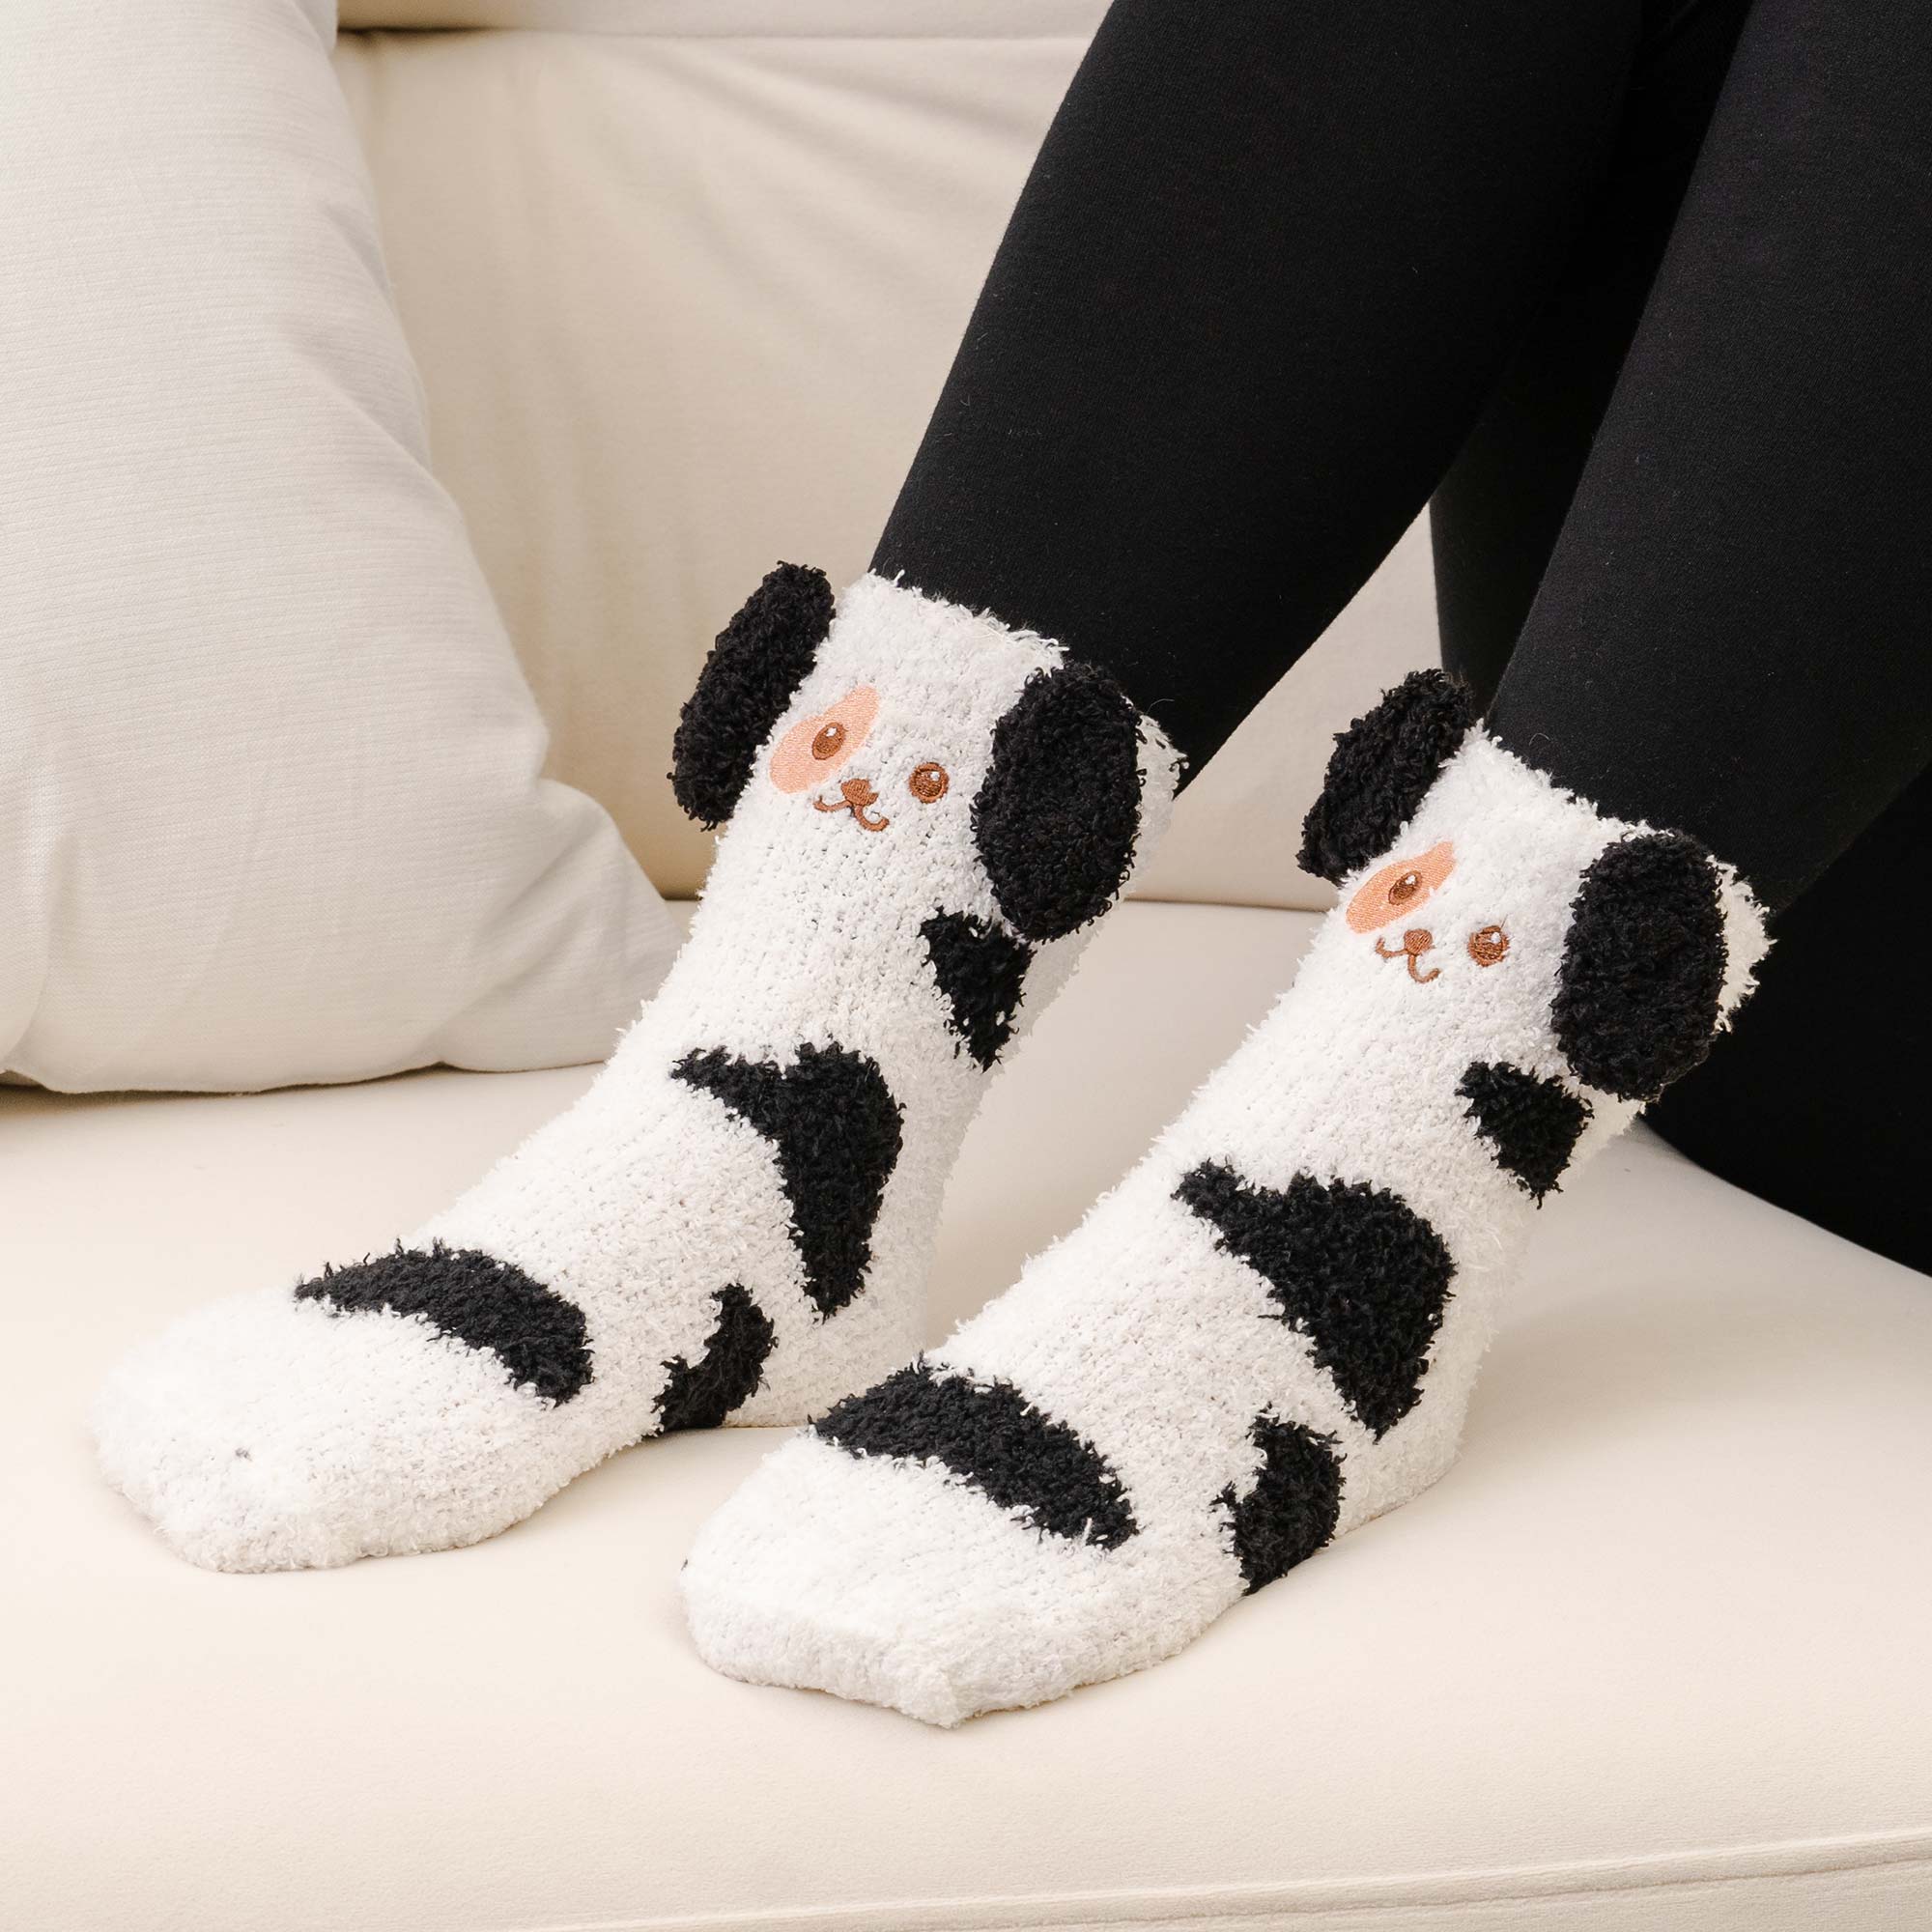 Image of Warm ‘n Fuzzy Black & White Dog Socks Super Deal $1.99 ( Limit 1 per Customer)